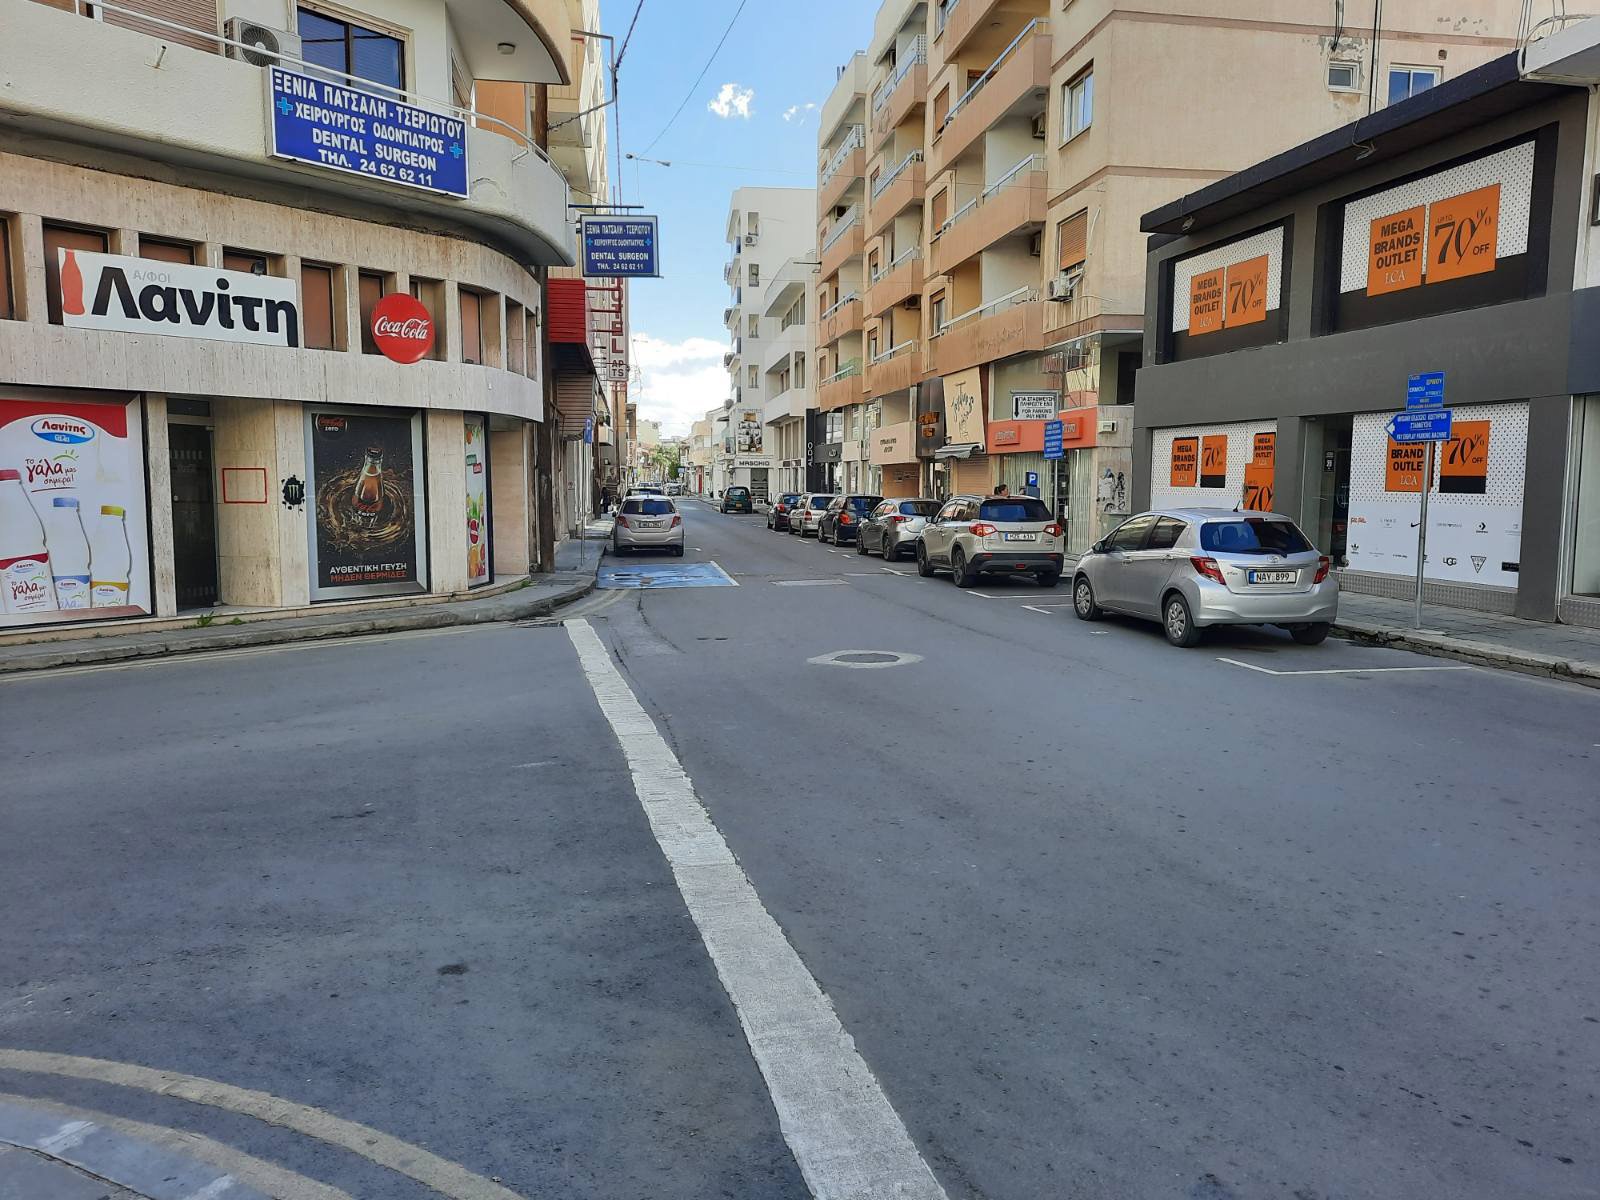 image Coronavirus: Larnaca shops in dire straits says union